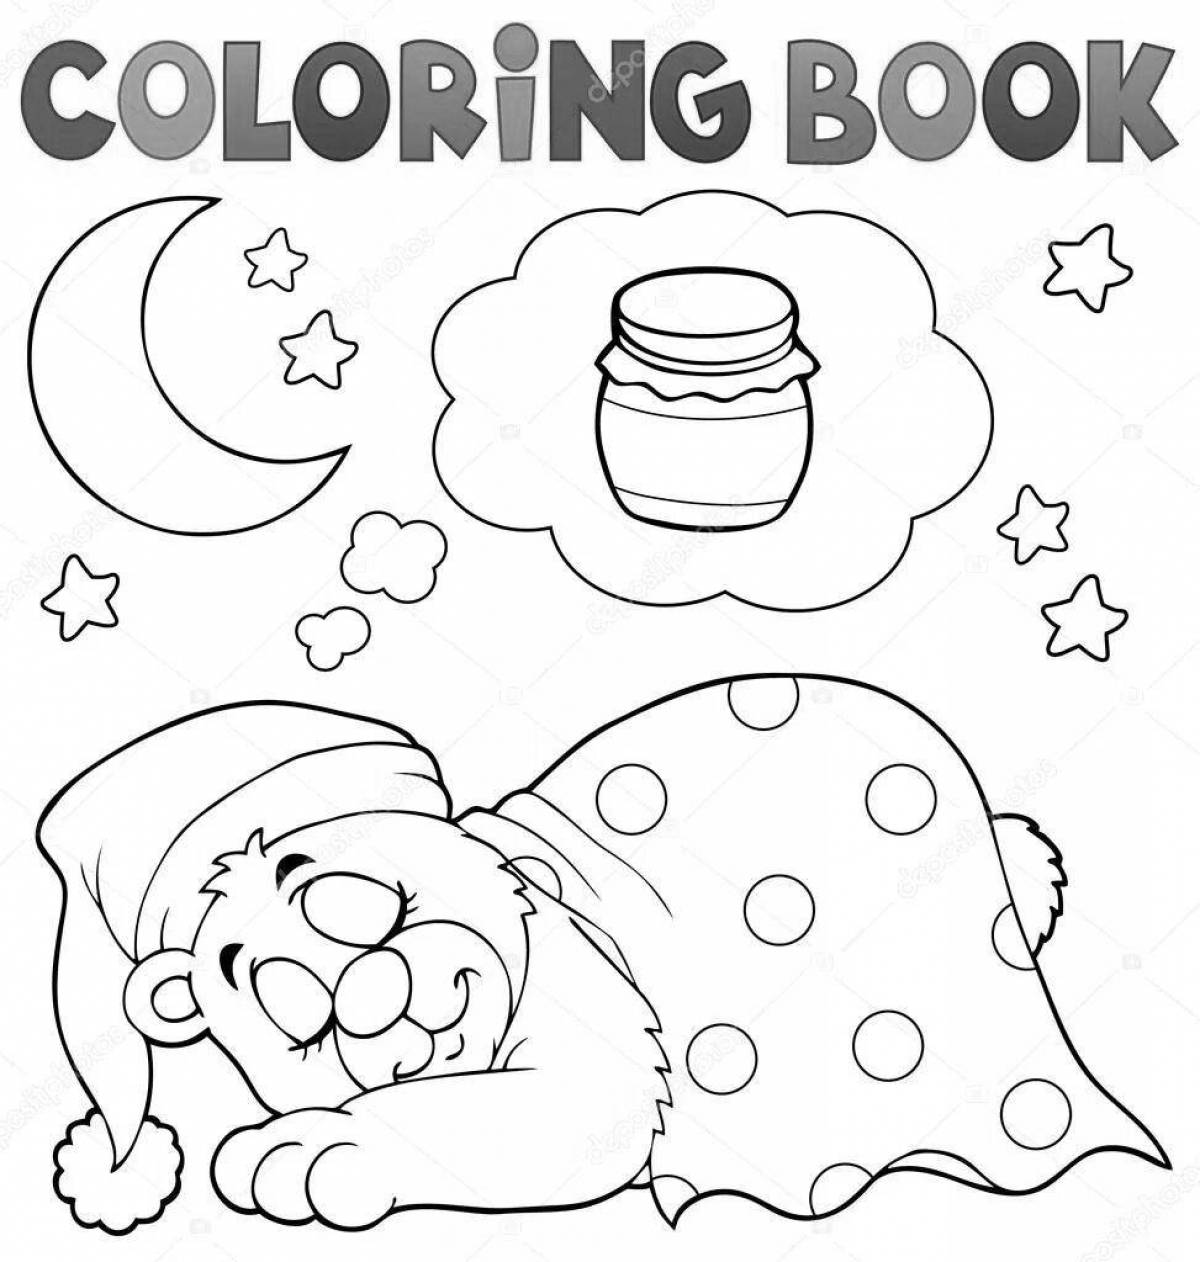 Magic coloring: why do bears sleep in winter?